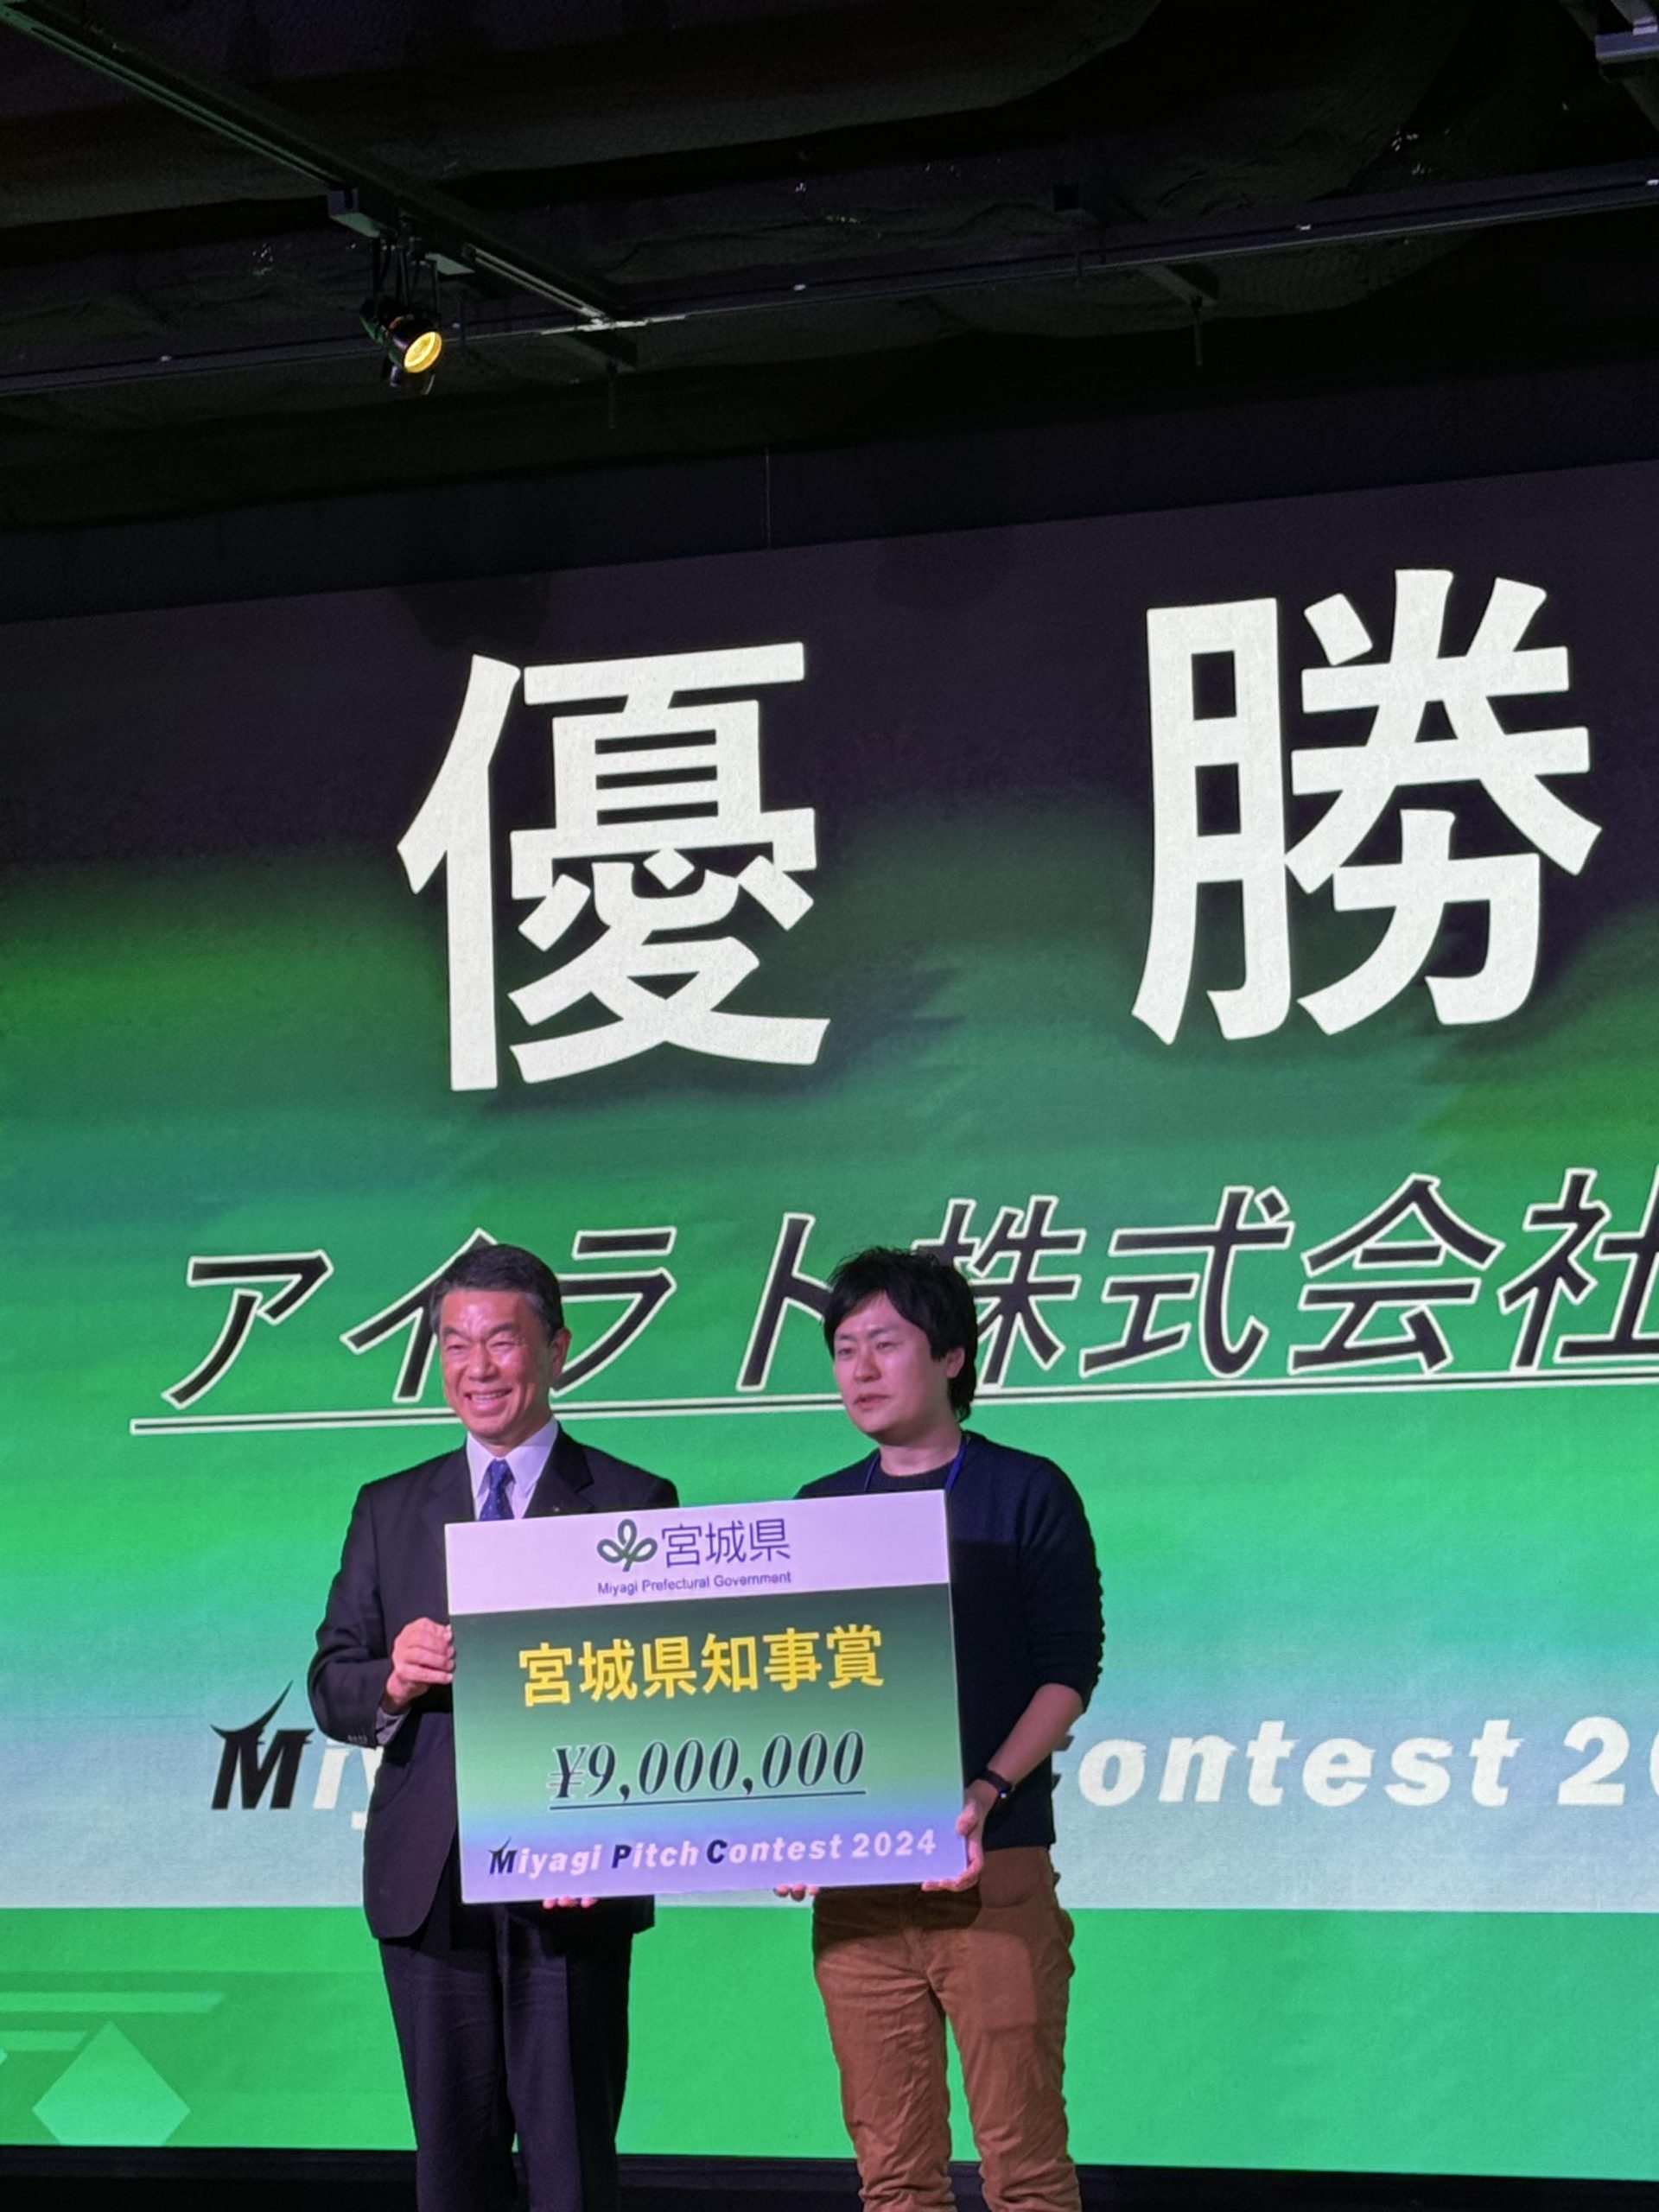 We won the DX-themed contest (Miyagi Pitch Contest) sponsored by Miyagi Prefecture.